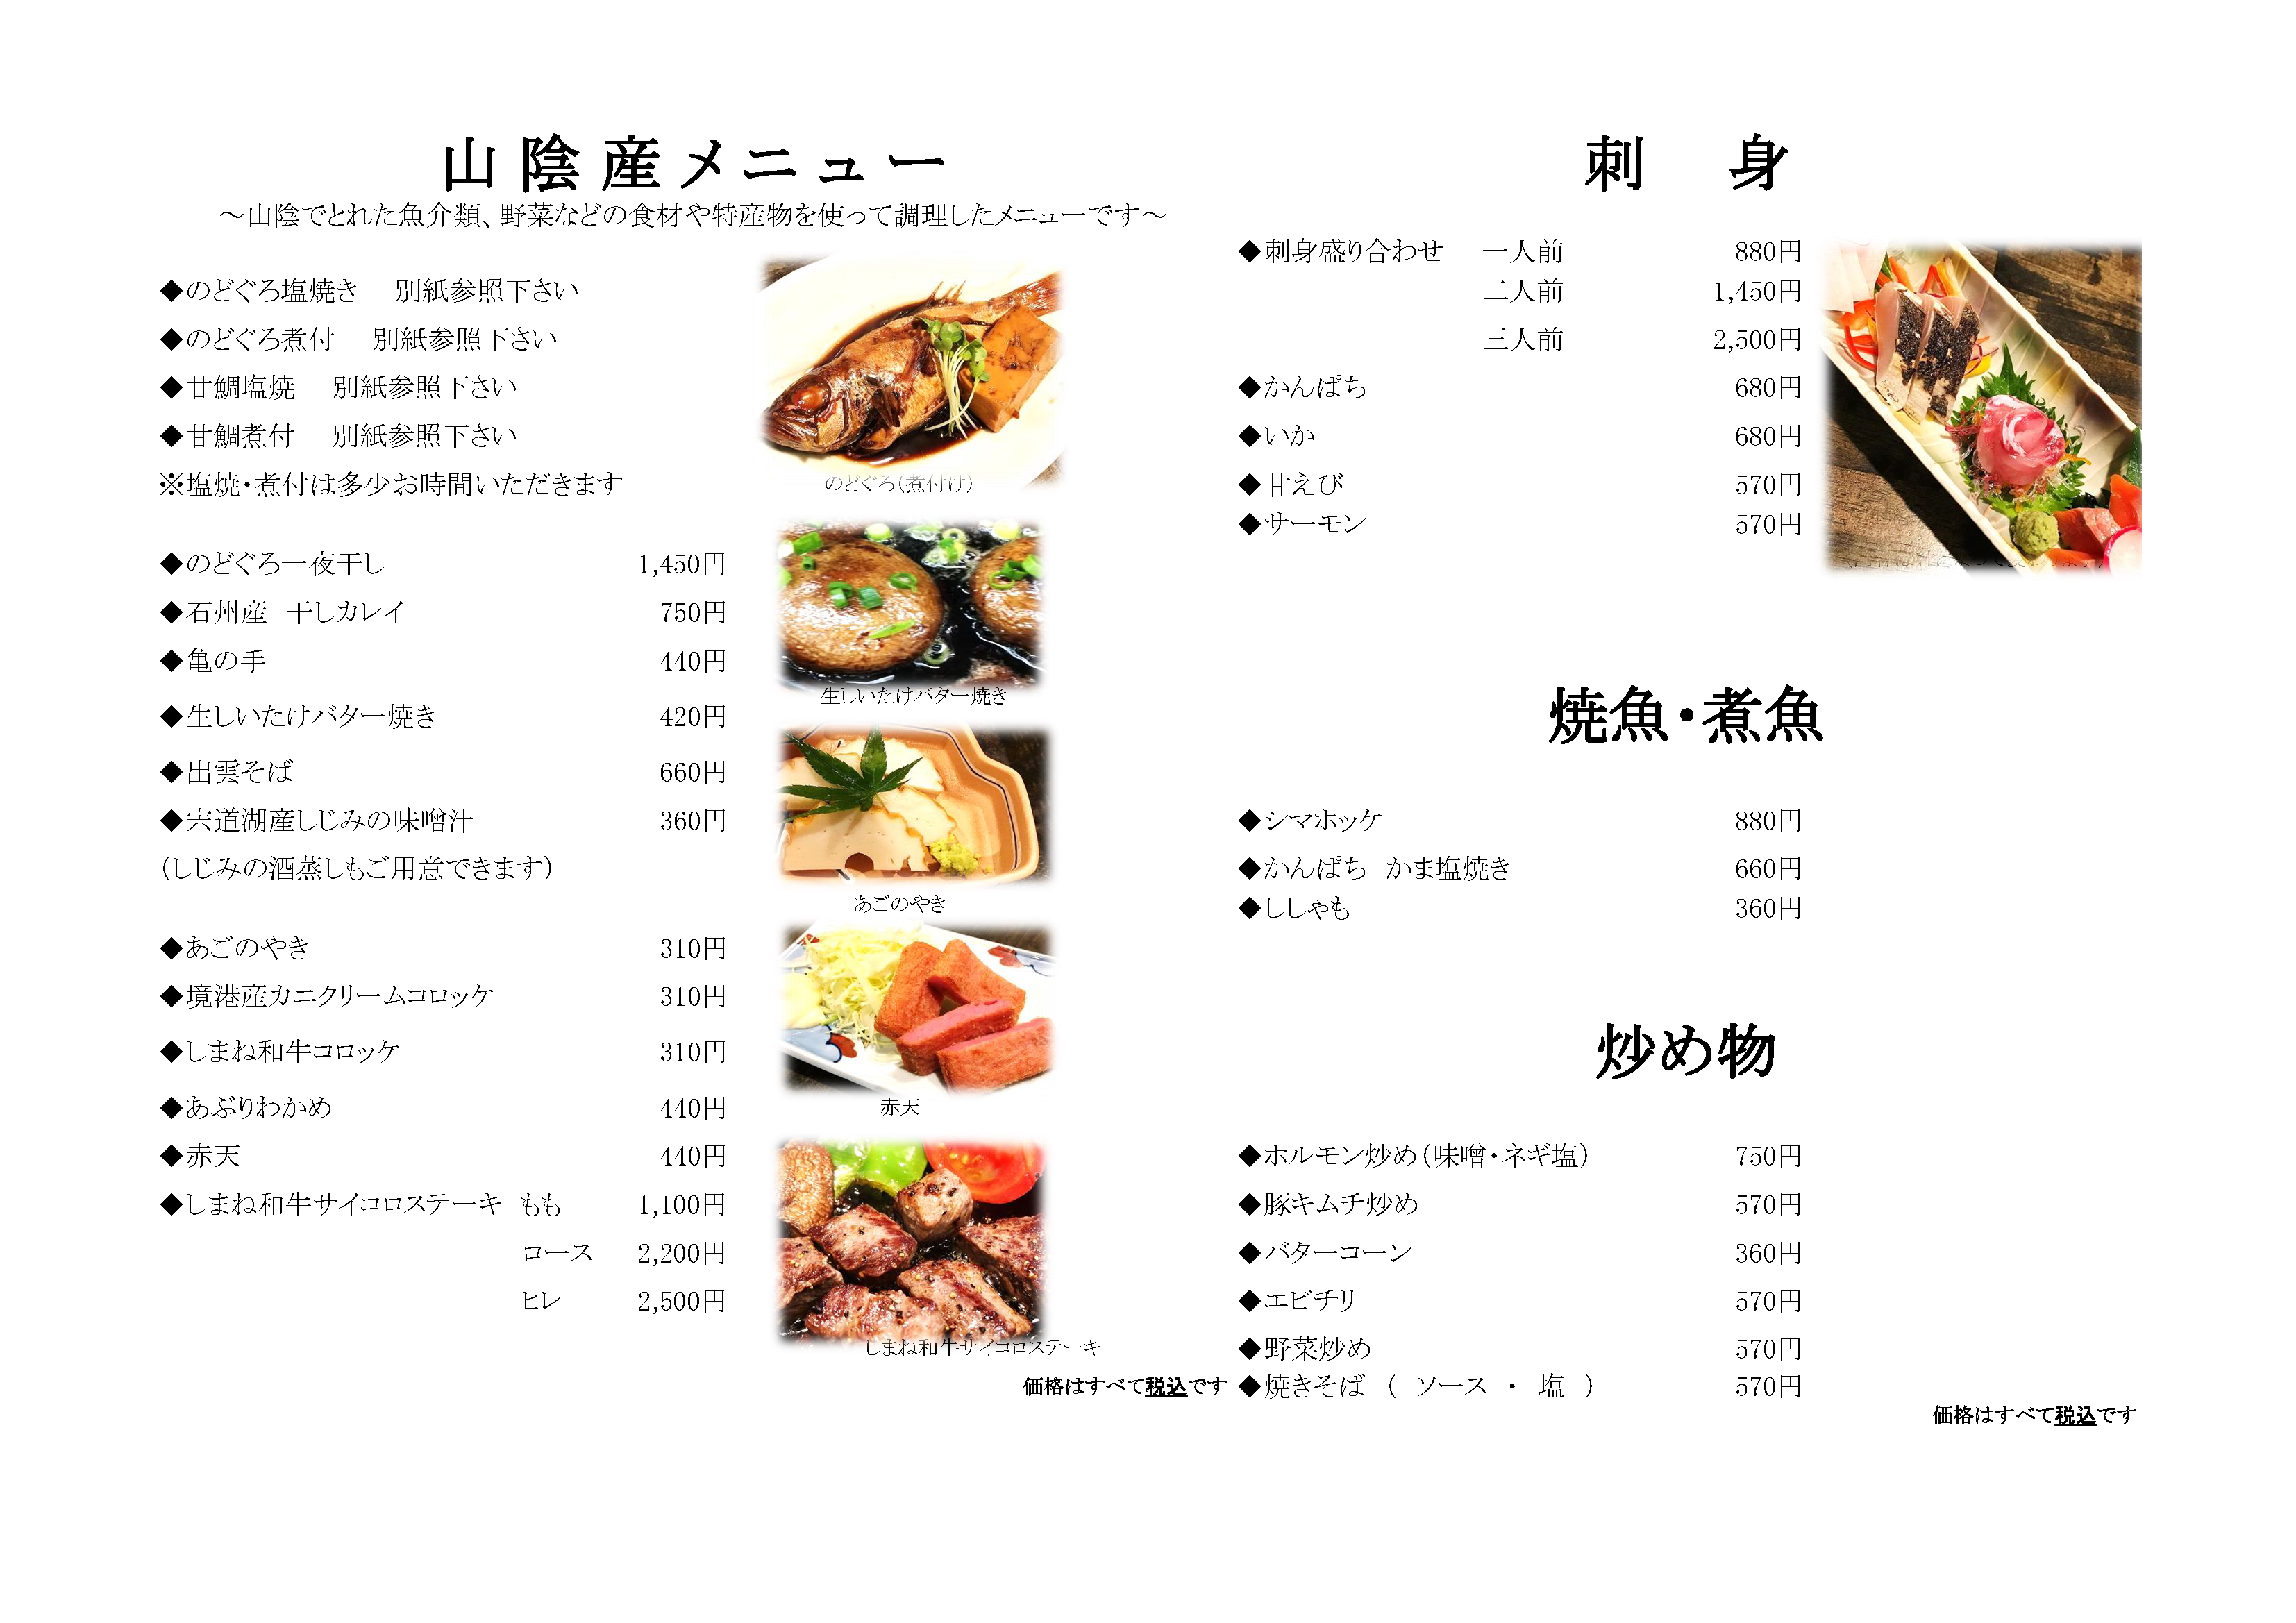 izumo-food-menu-1